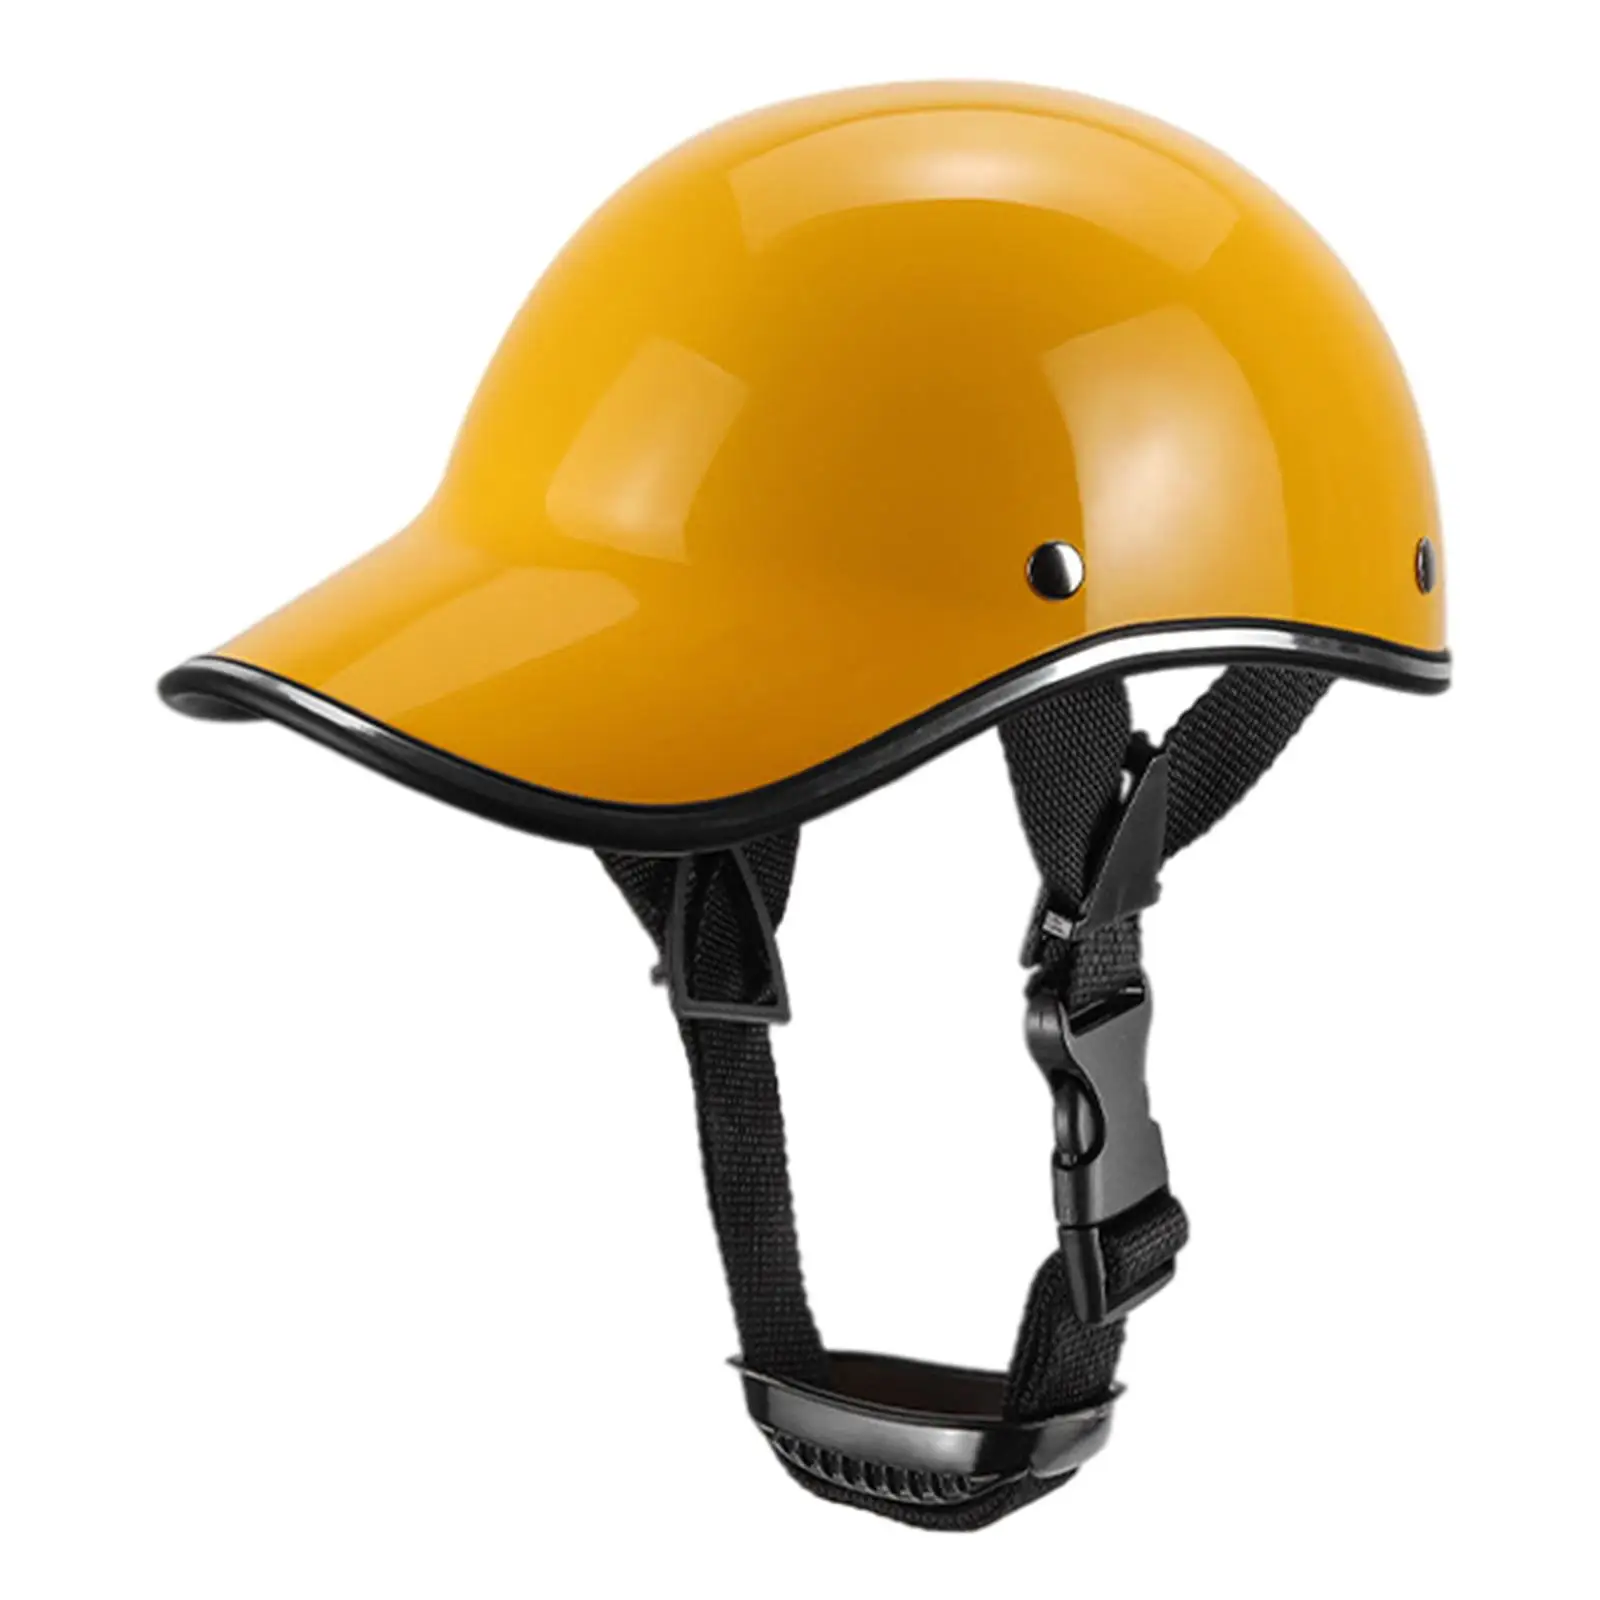 Bike Helmet Biking Headgear Hard Caps Sunshade Sun Protection Safety Breathable for Women Men Climbing Cycling Sports Road Bike